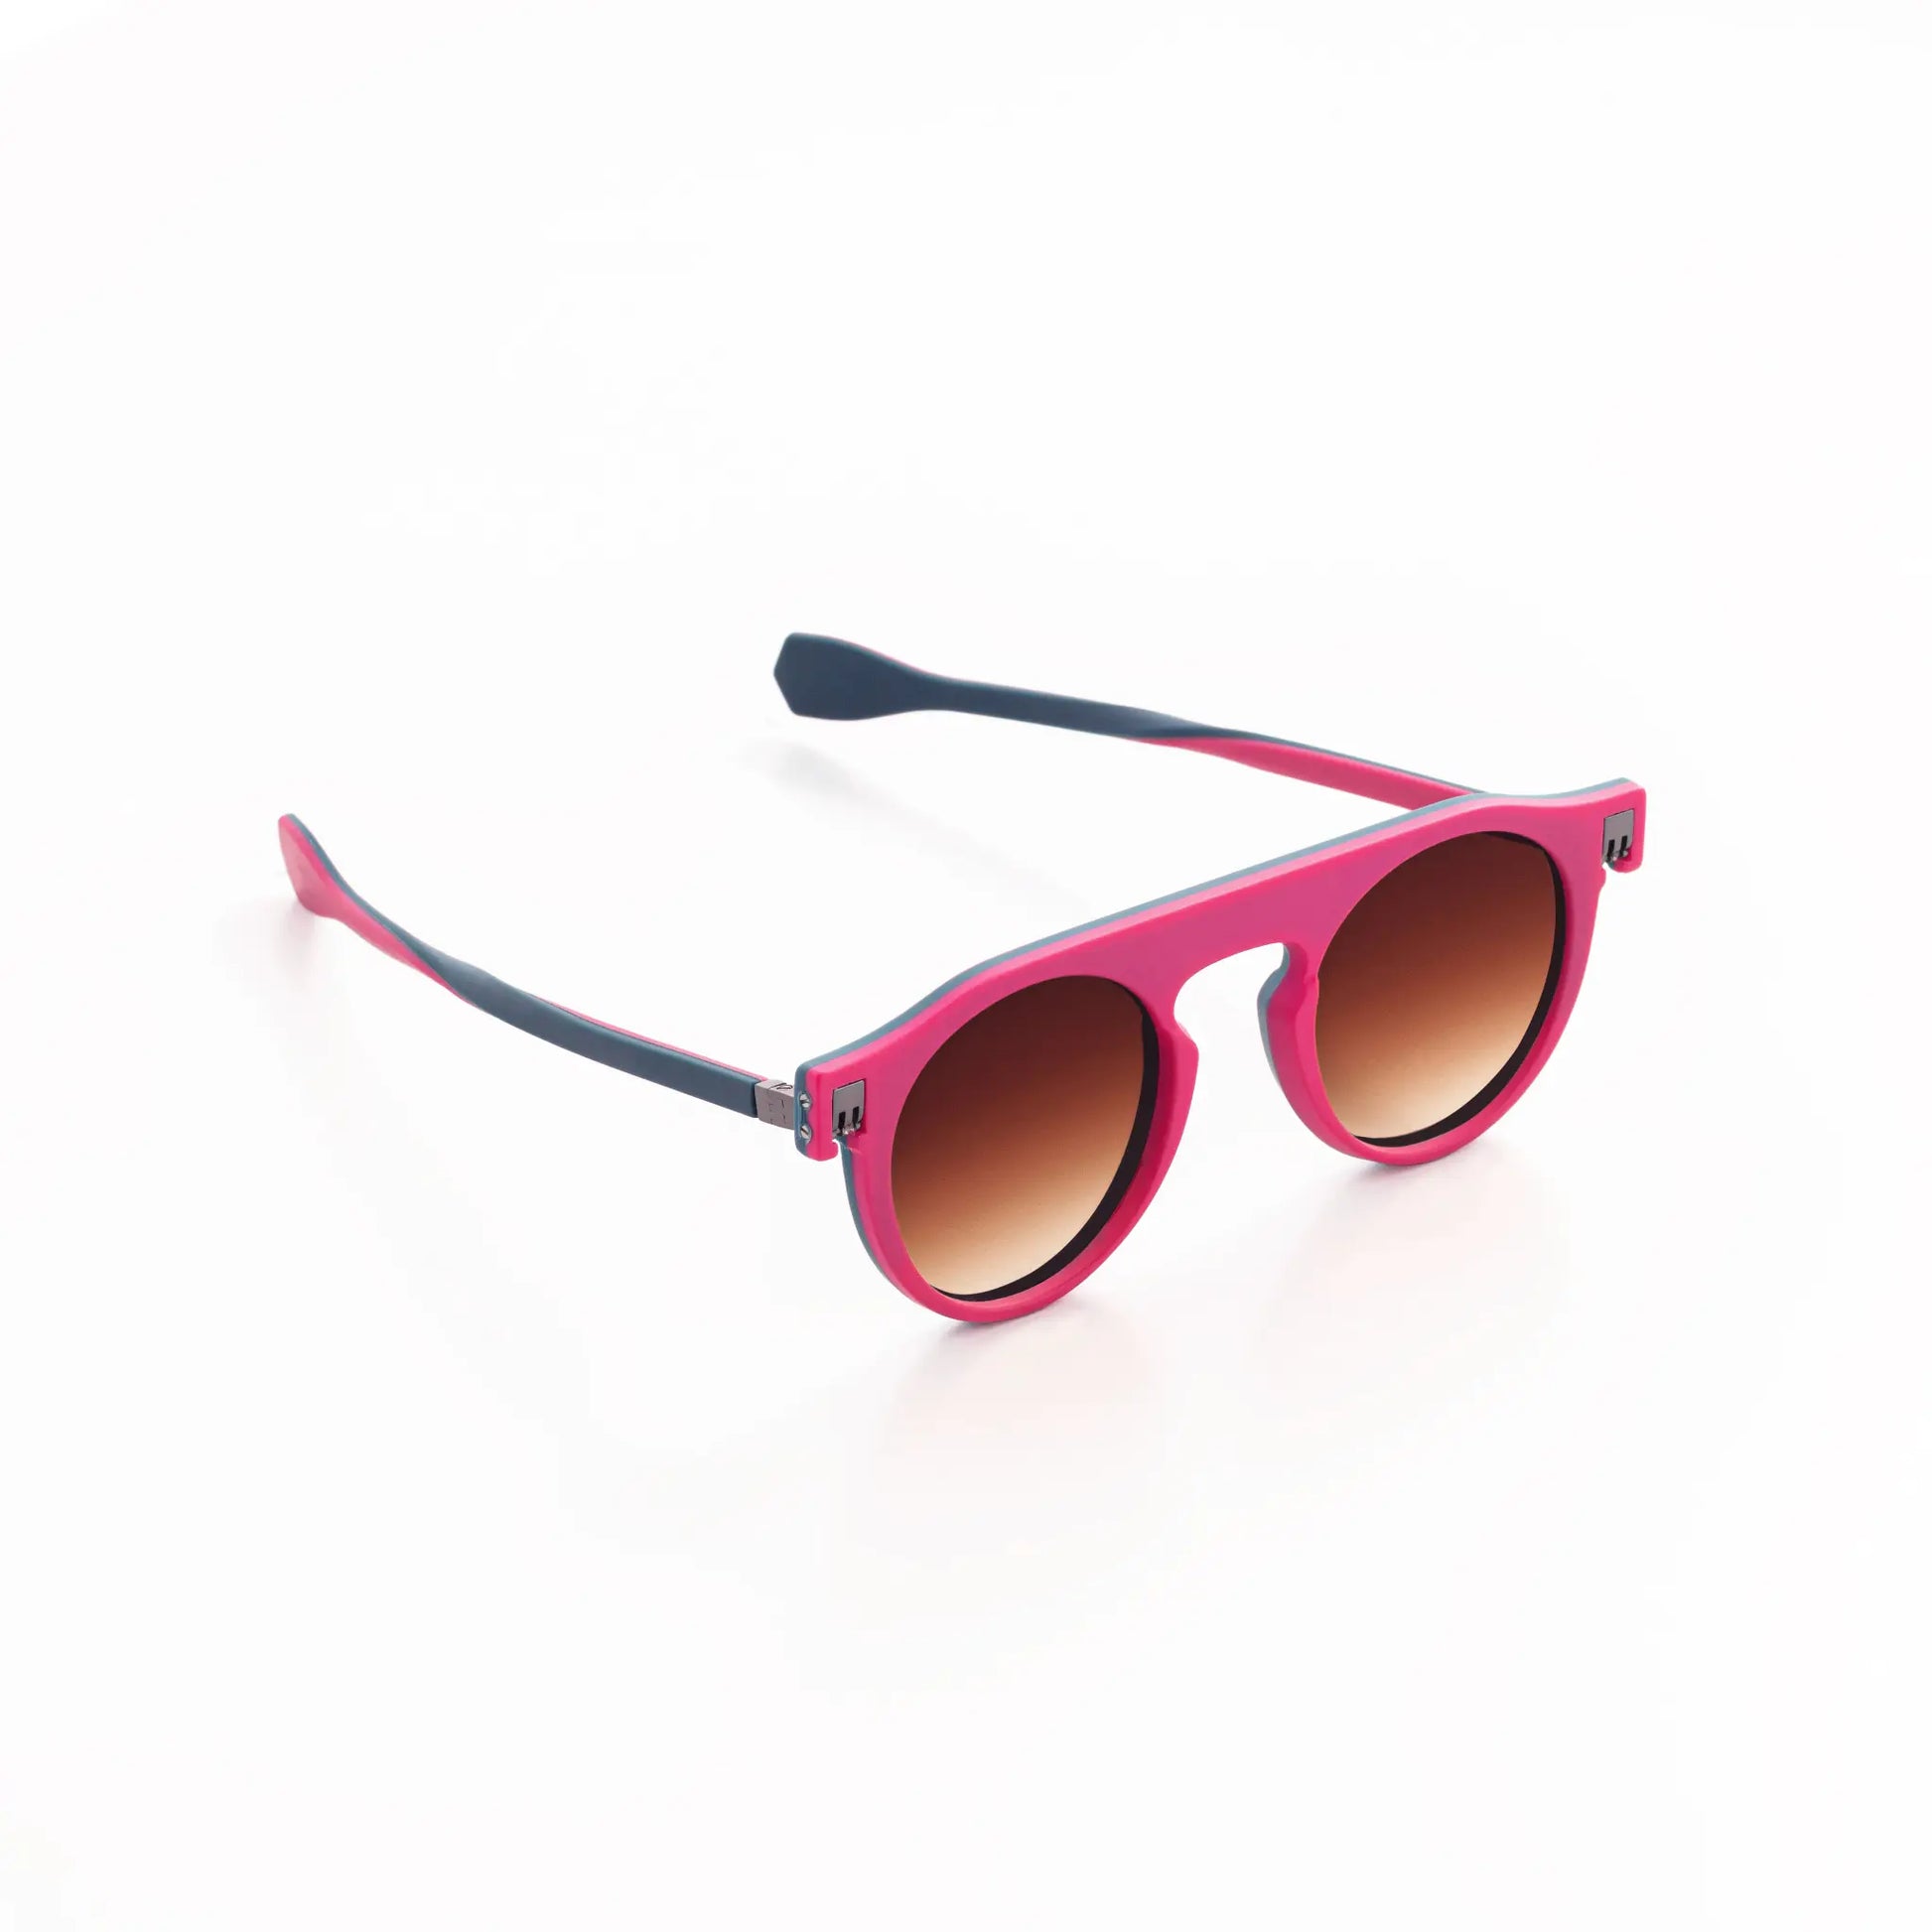 Reverso sunglasses pink & petrol reversible & ultra light side view 1